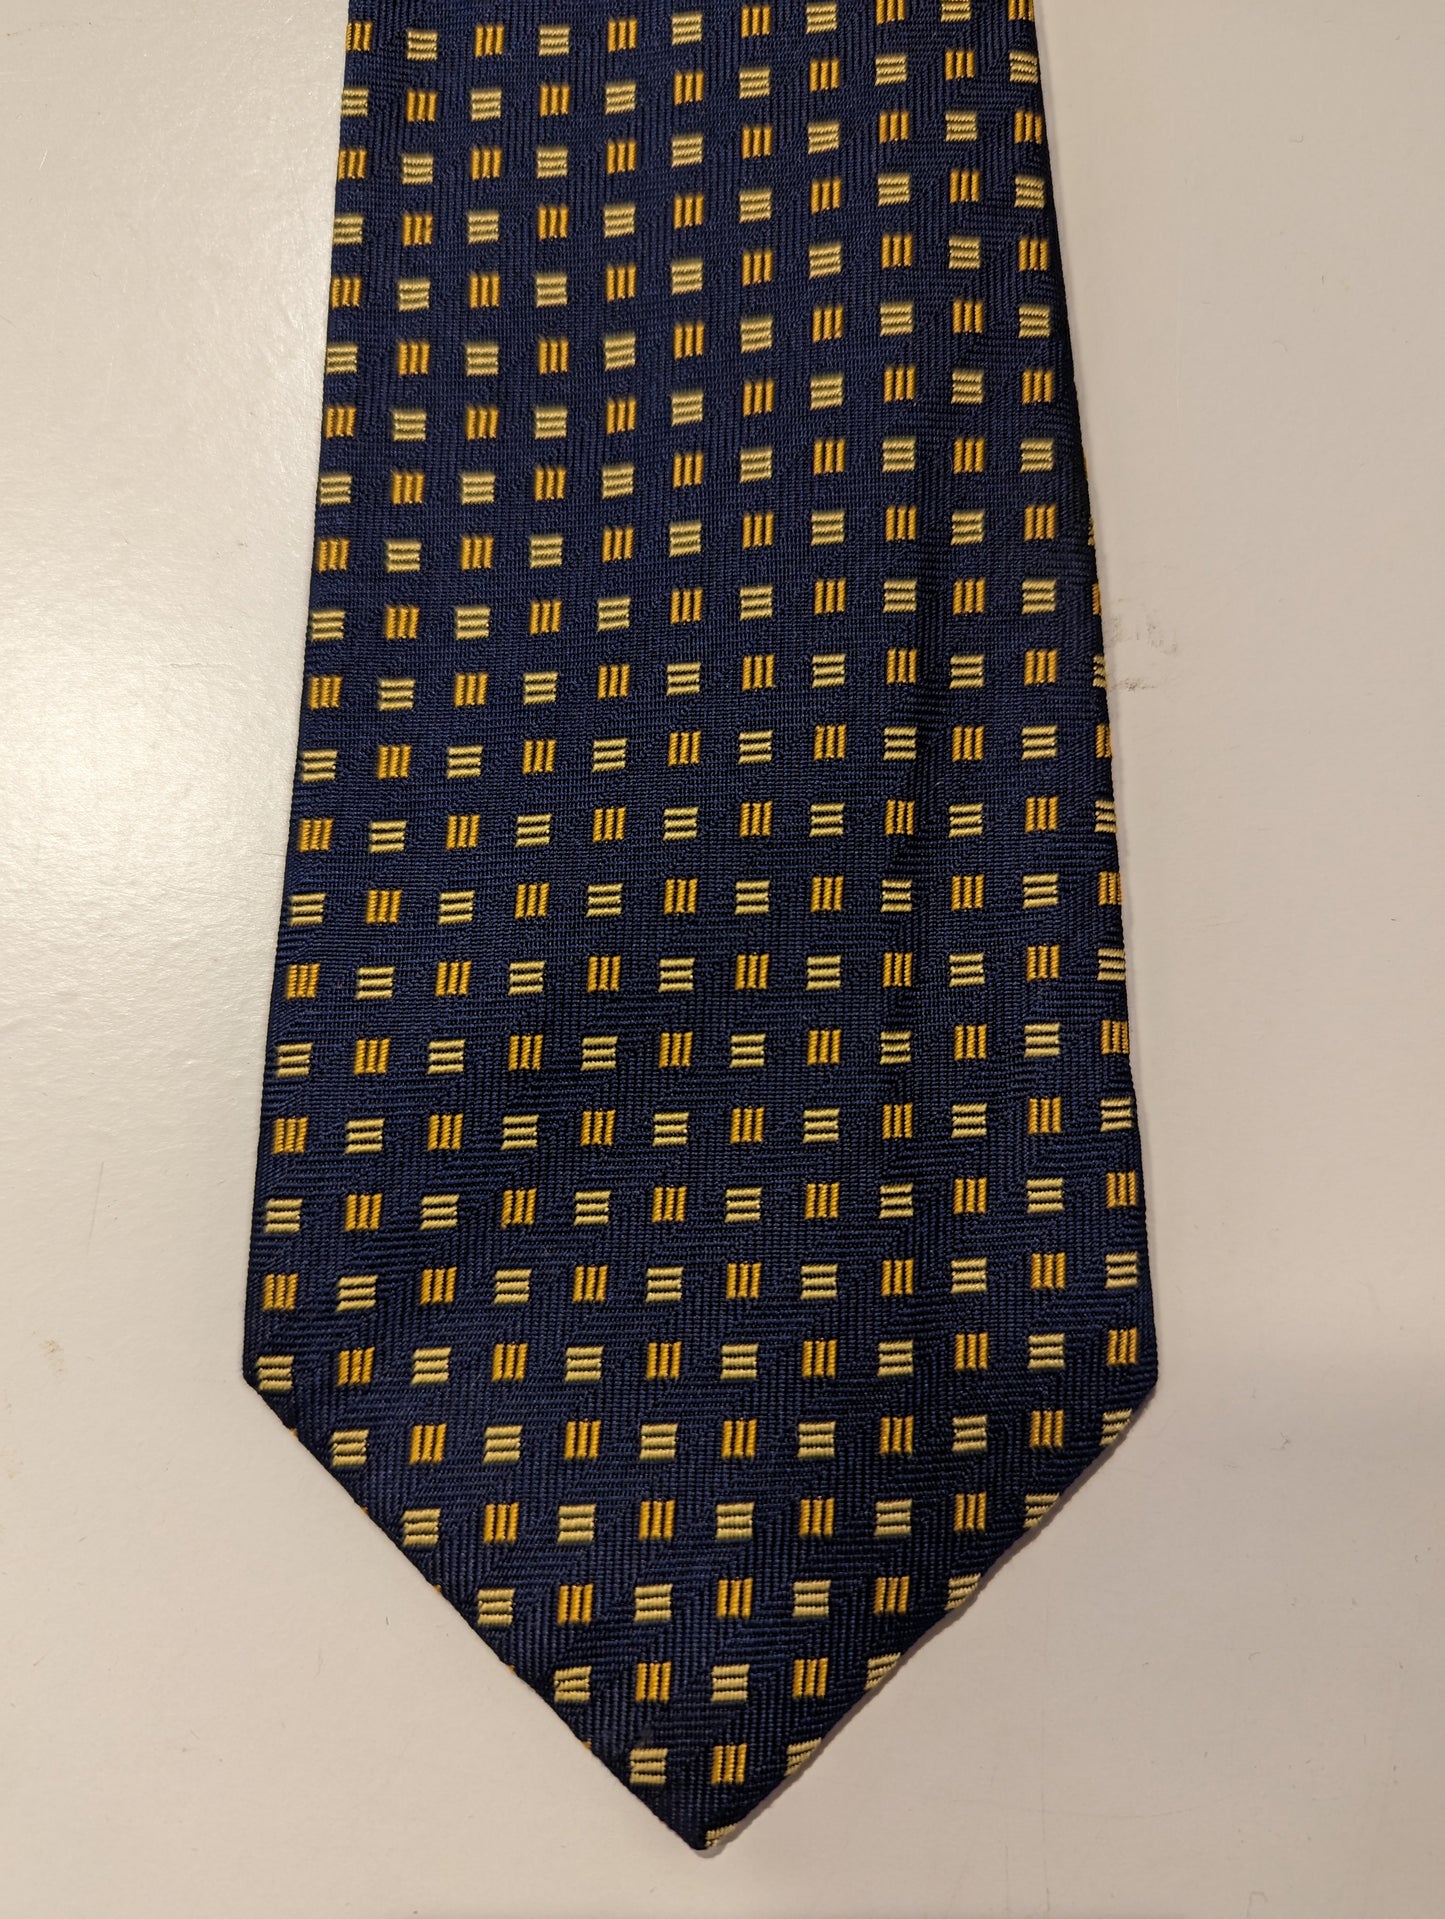 The English Hatter zijde stropdas. Blauw geel motief.